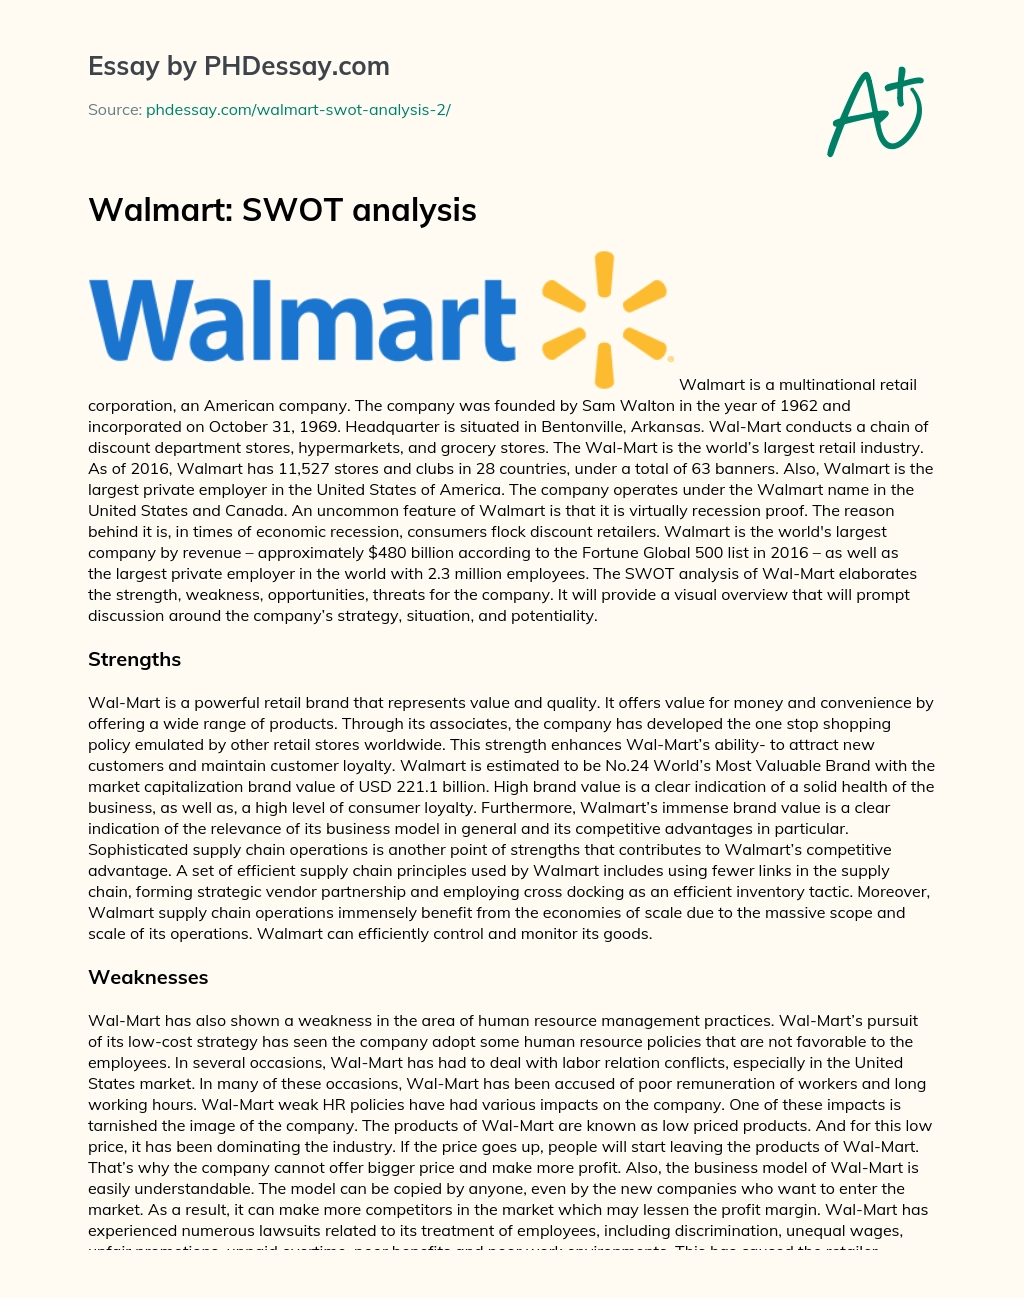 Walmart: SWOT analysis essay